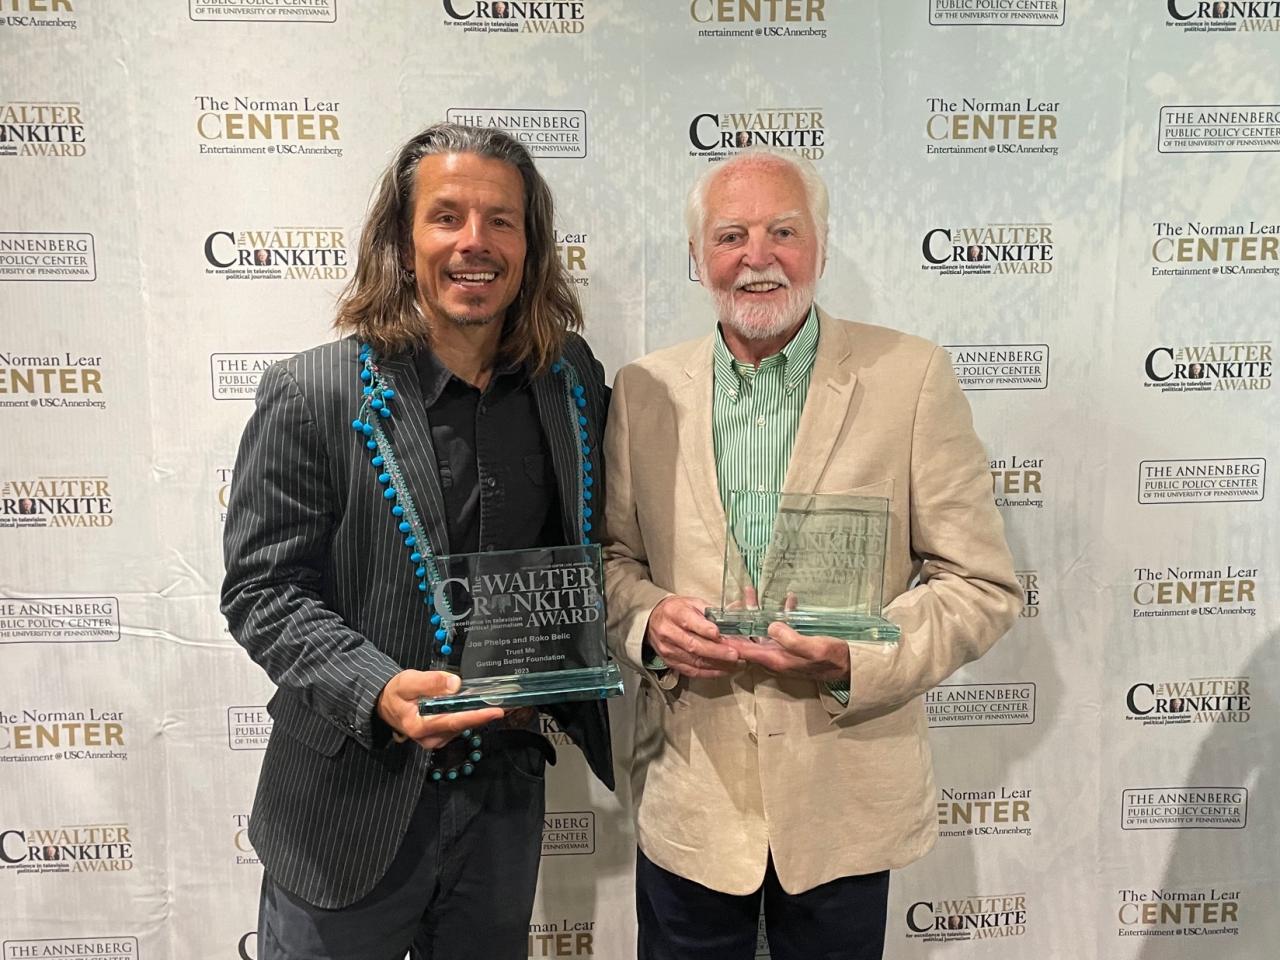 Joe Phelps (R) and Roko Belic (L) receiving the Walter Cronkite Award for “Trust Me”